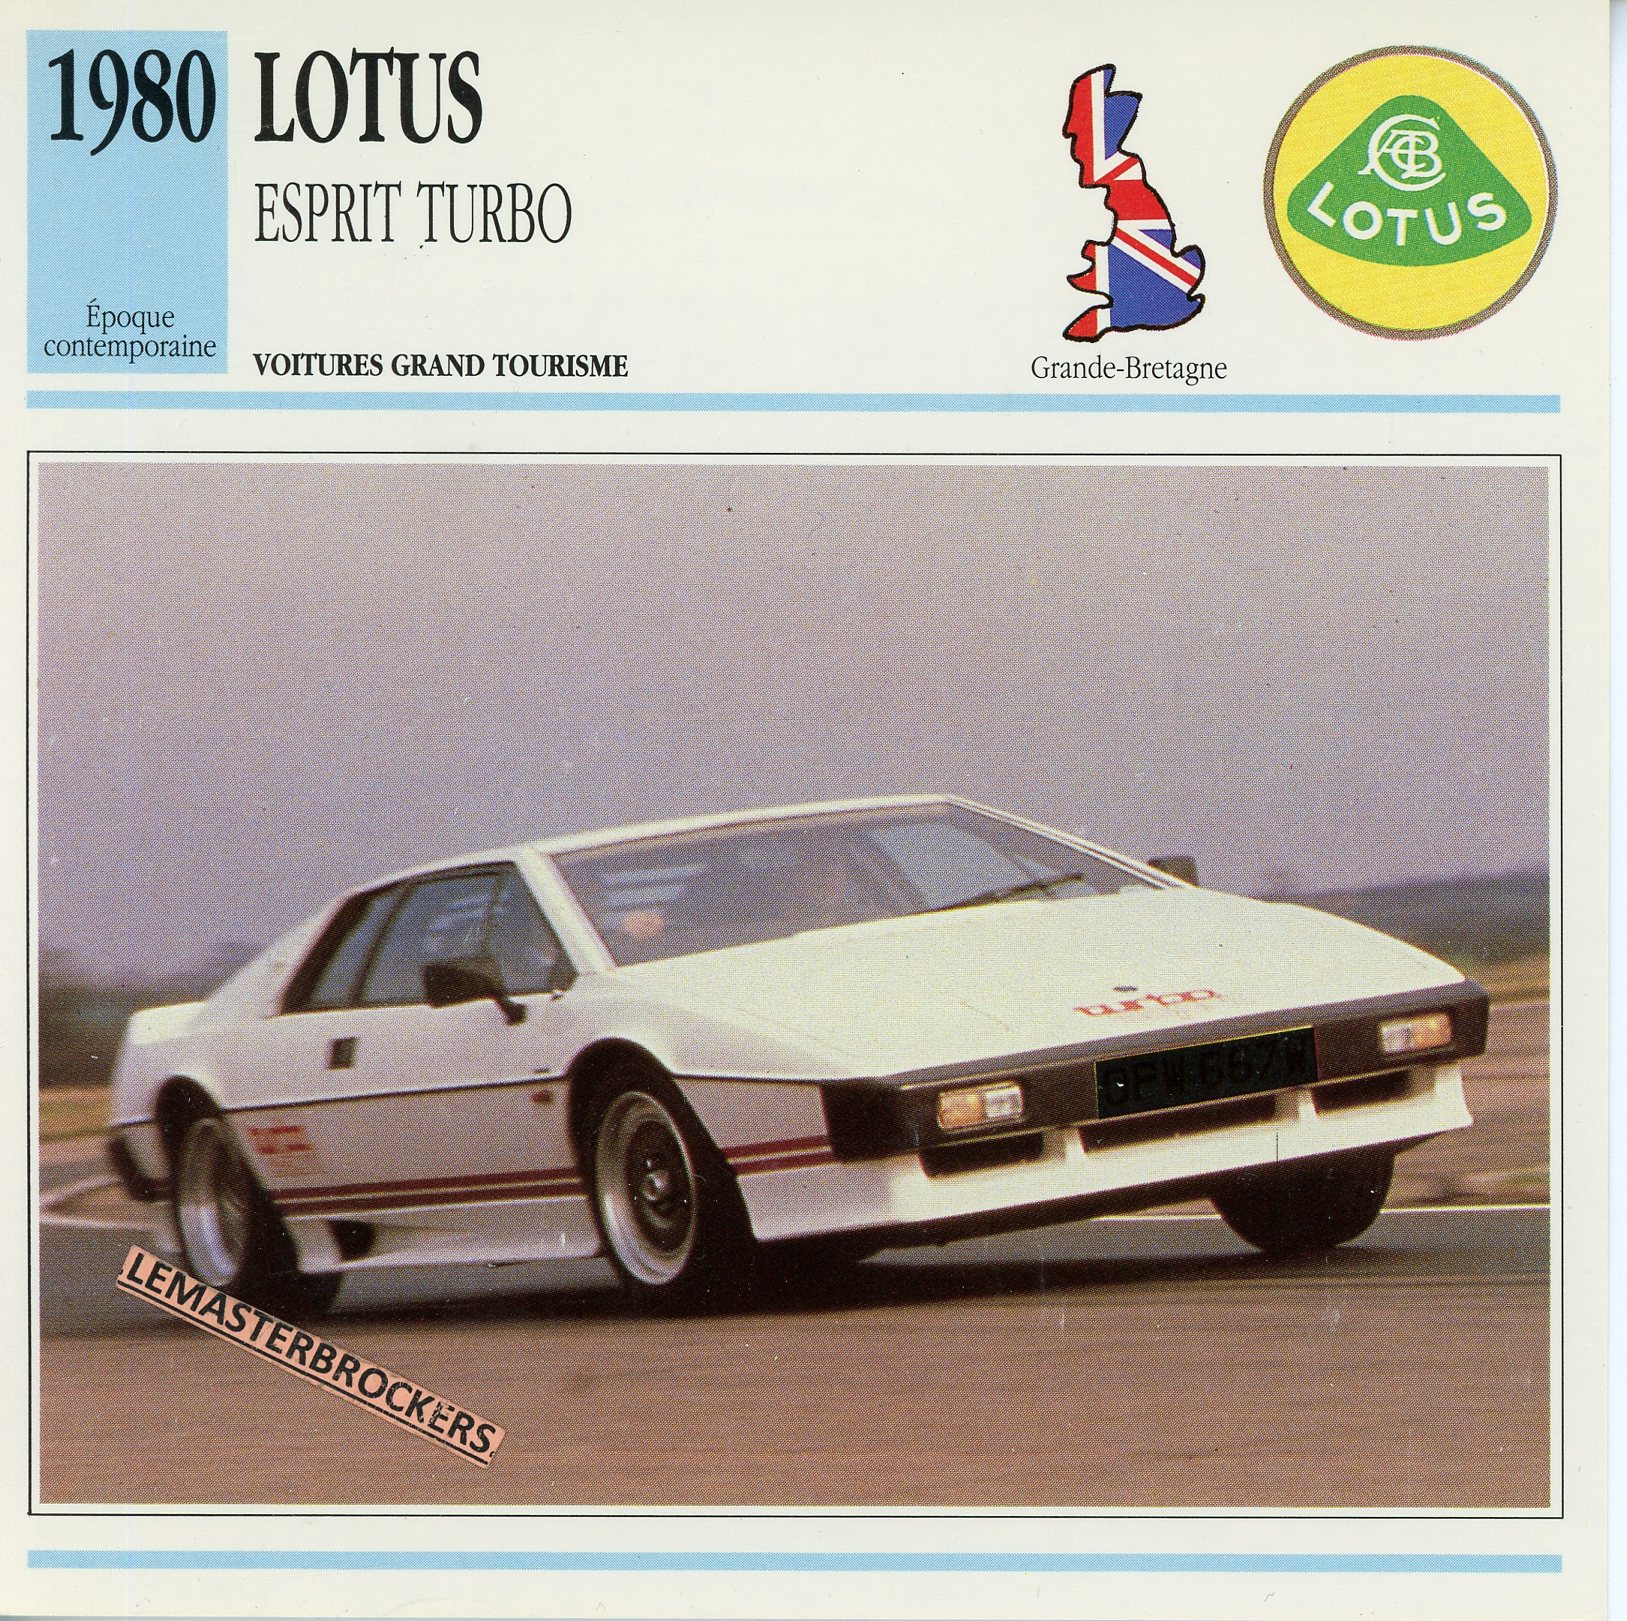 LOTUS-ESPRIT-TURBO-1980-FICHE-AUTO-ATLAS-LEMASTERBROCKERS